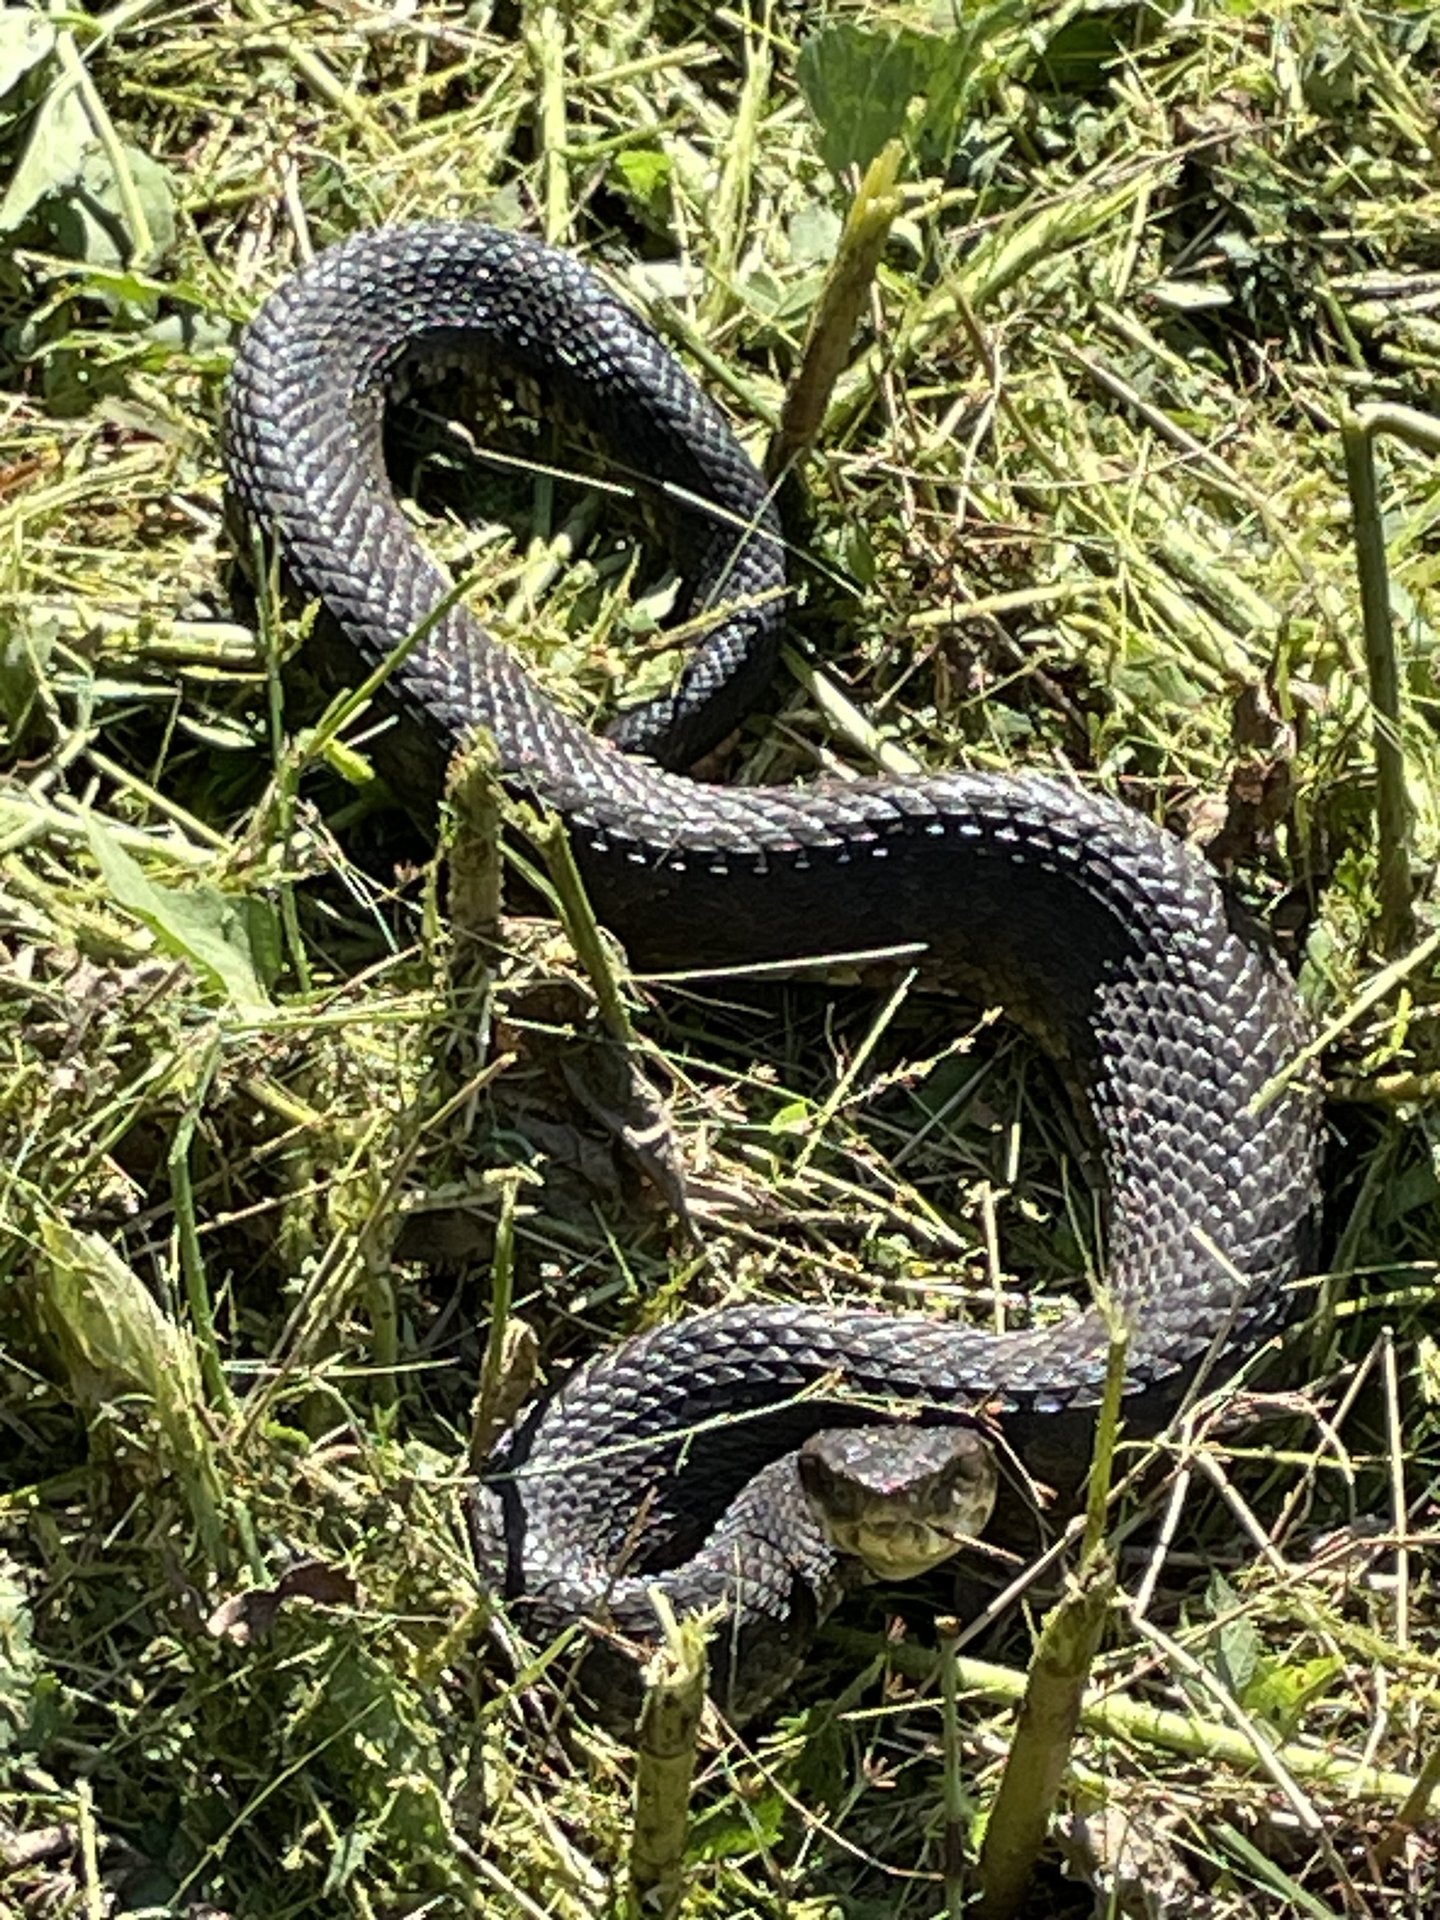 Ecoregion Snake Reptile Scaled reptile Terrestrial animal